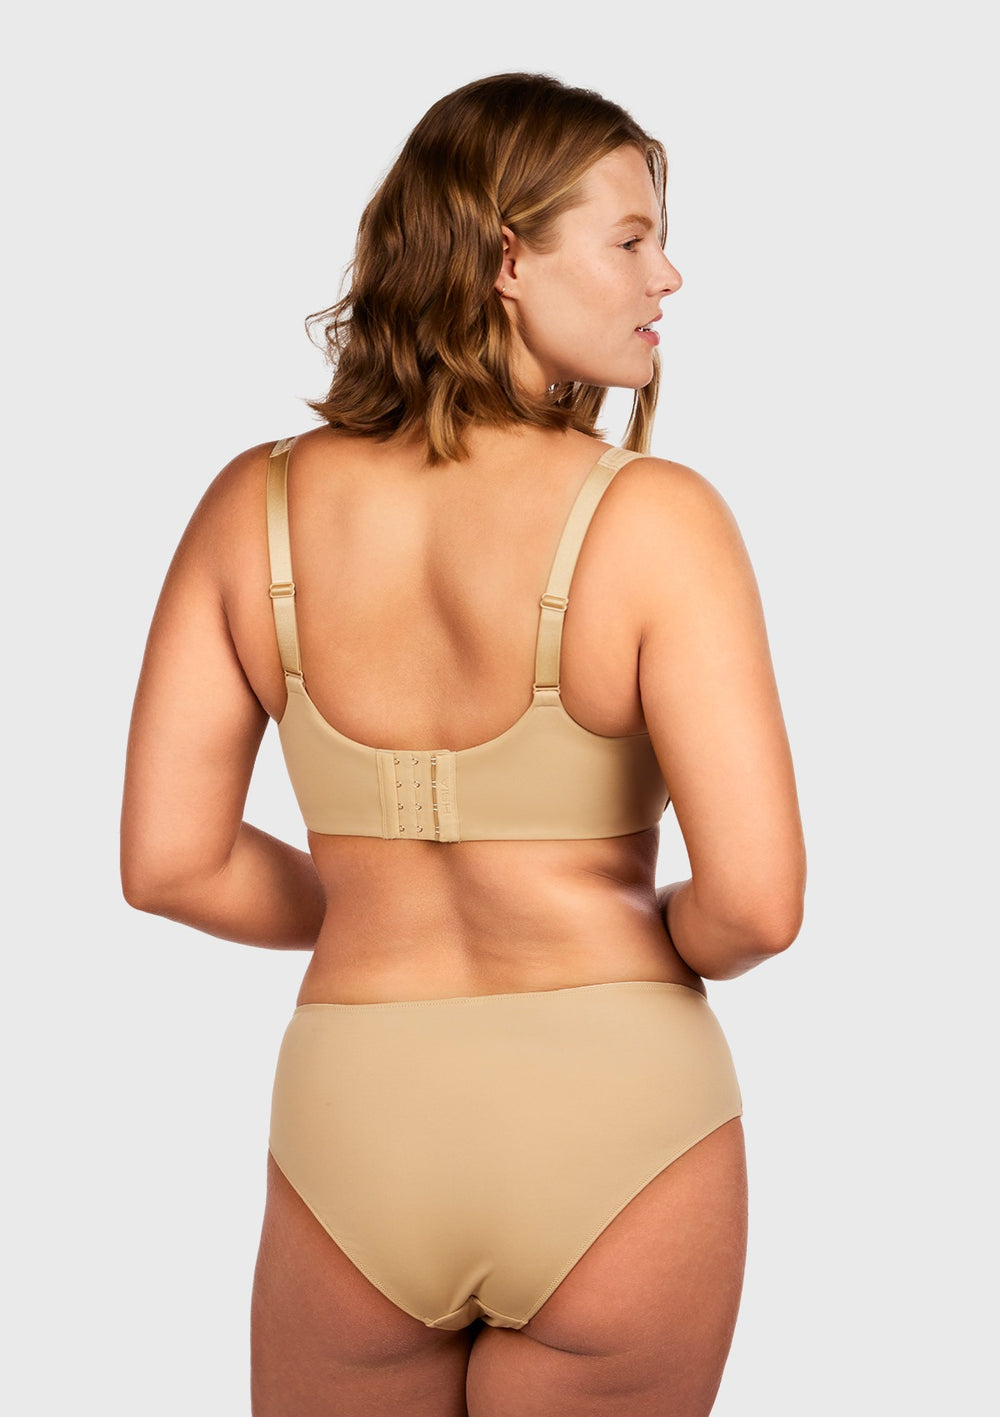 Entyinea Minimizer Bras for Women Seamless Push Up Lace Bra Comfortable  Breathable Base Tops Underwear Beige XXL 